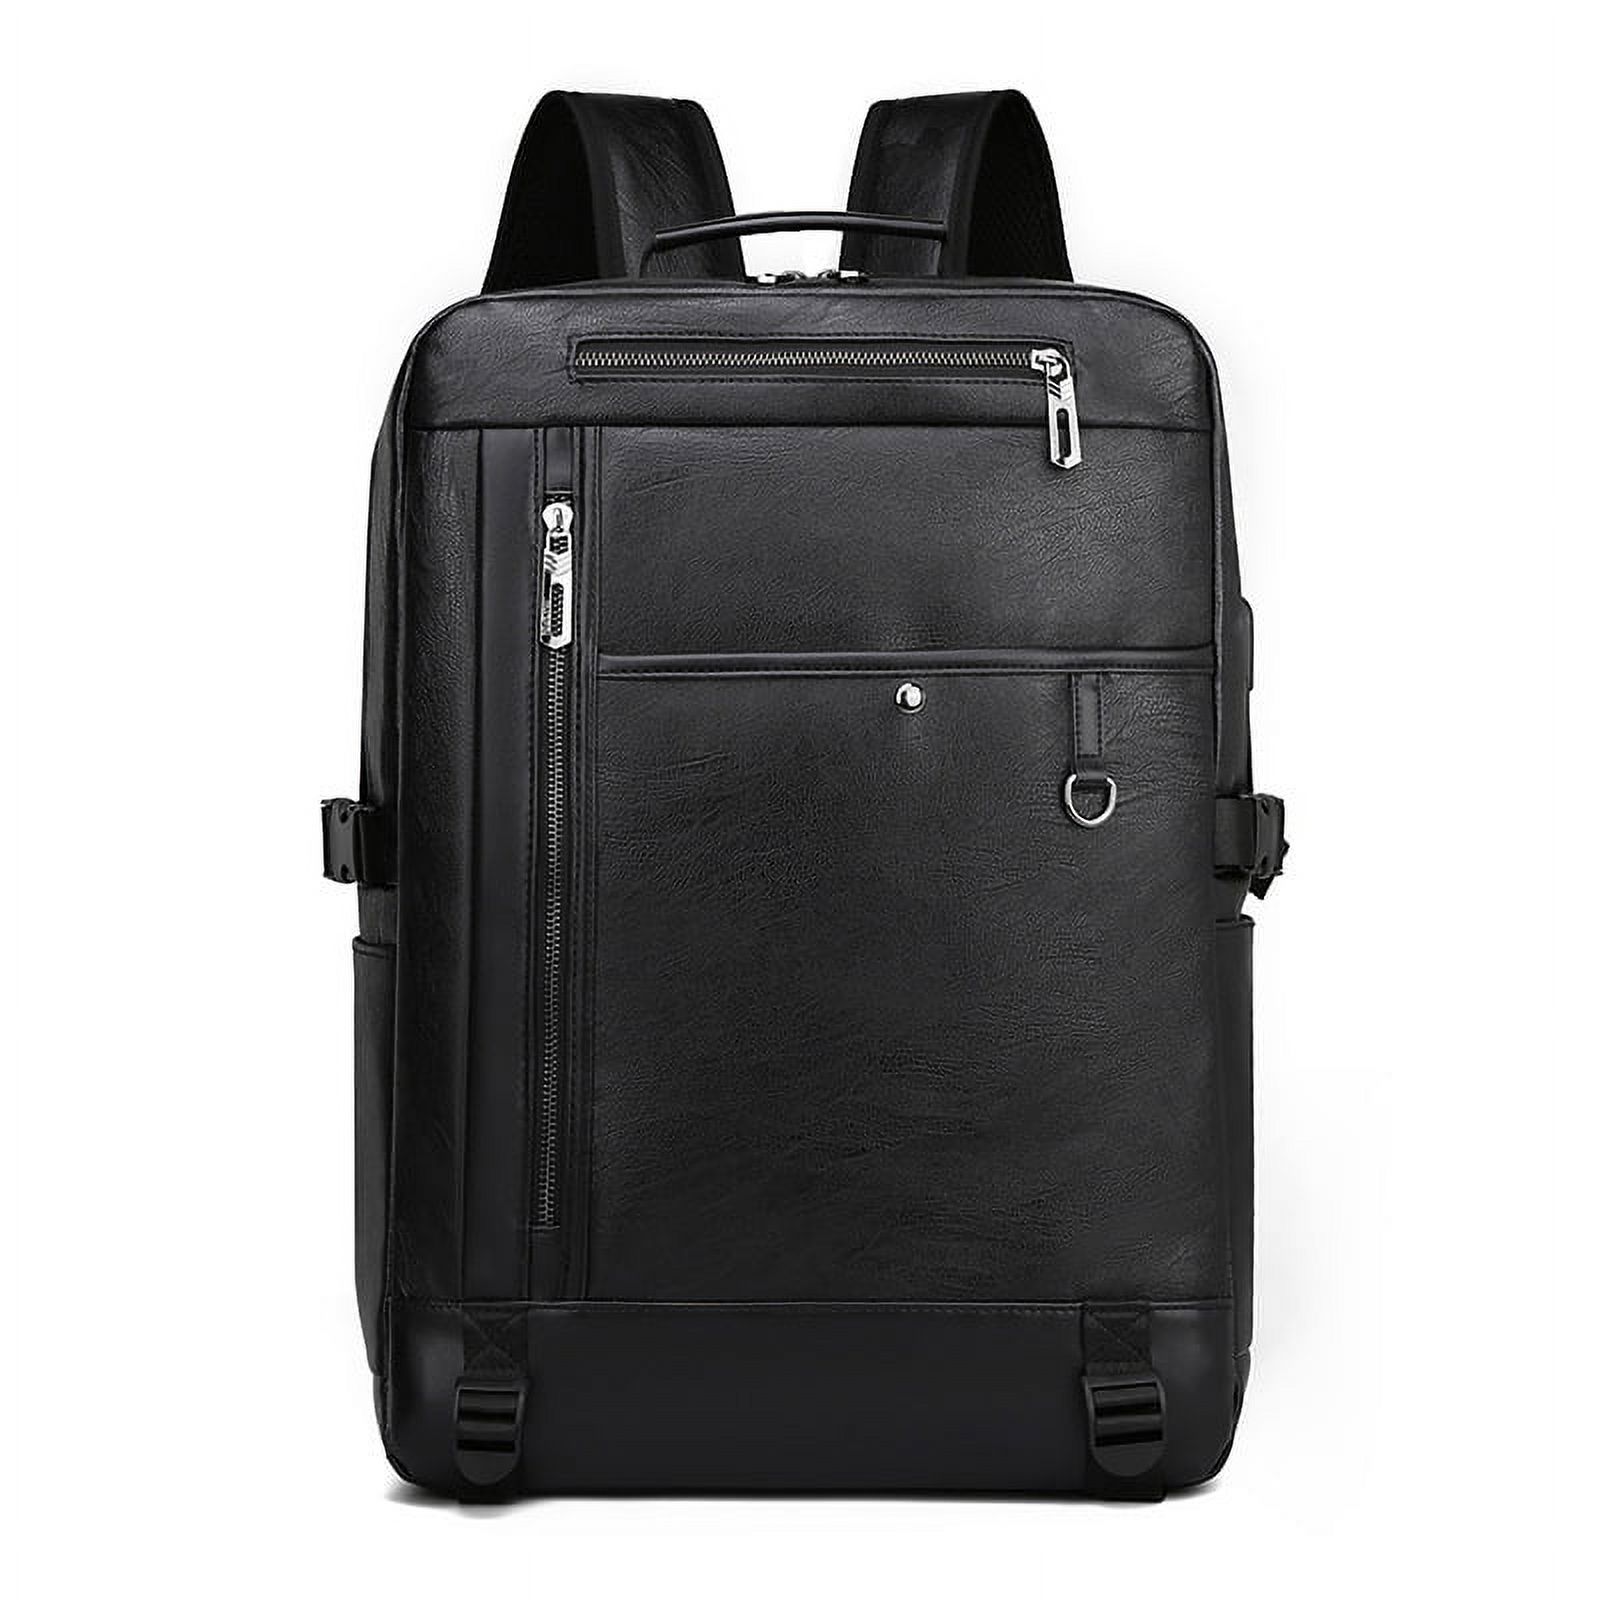 Toyella Summer New Trend Backpack Men's Business Travel Backpack Fashion Computer Bag Khaki - image 2 of 5